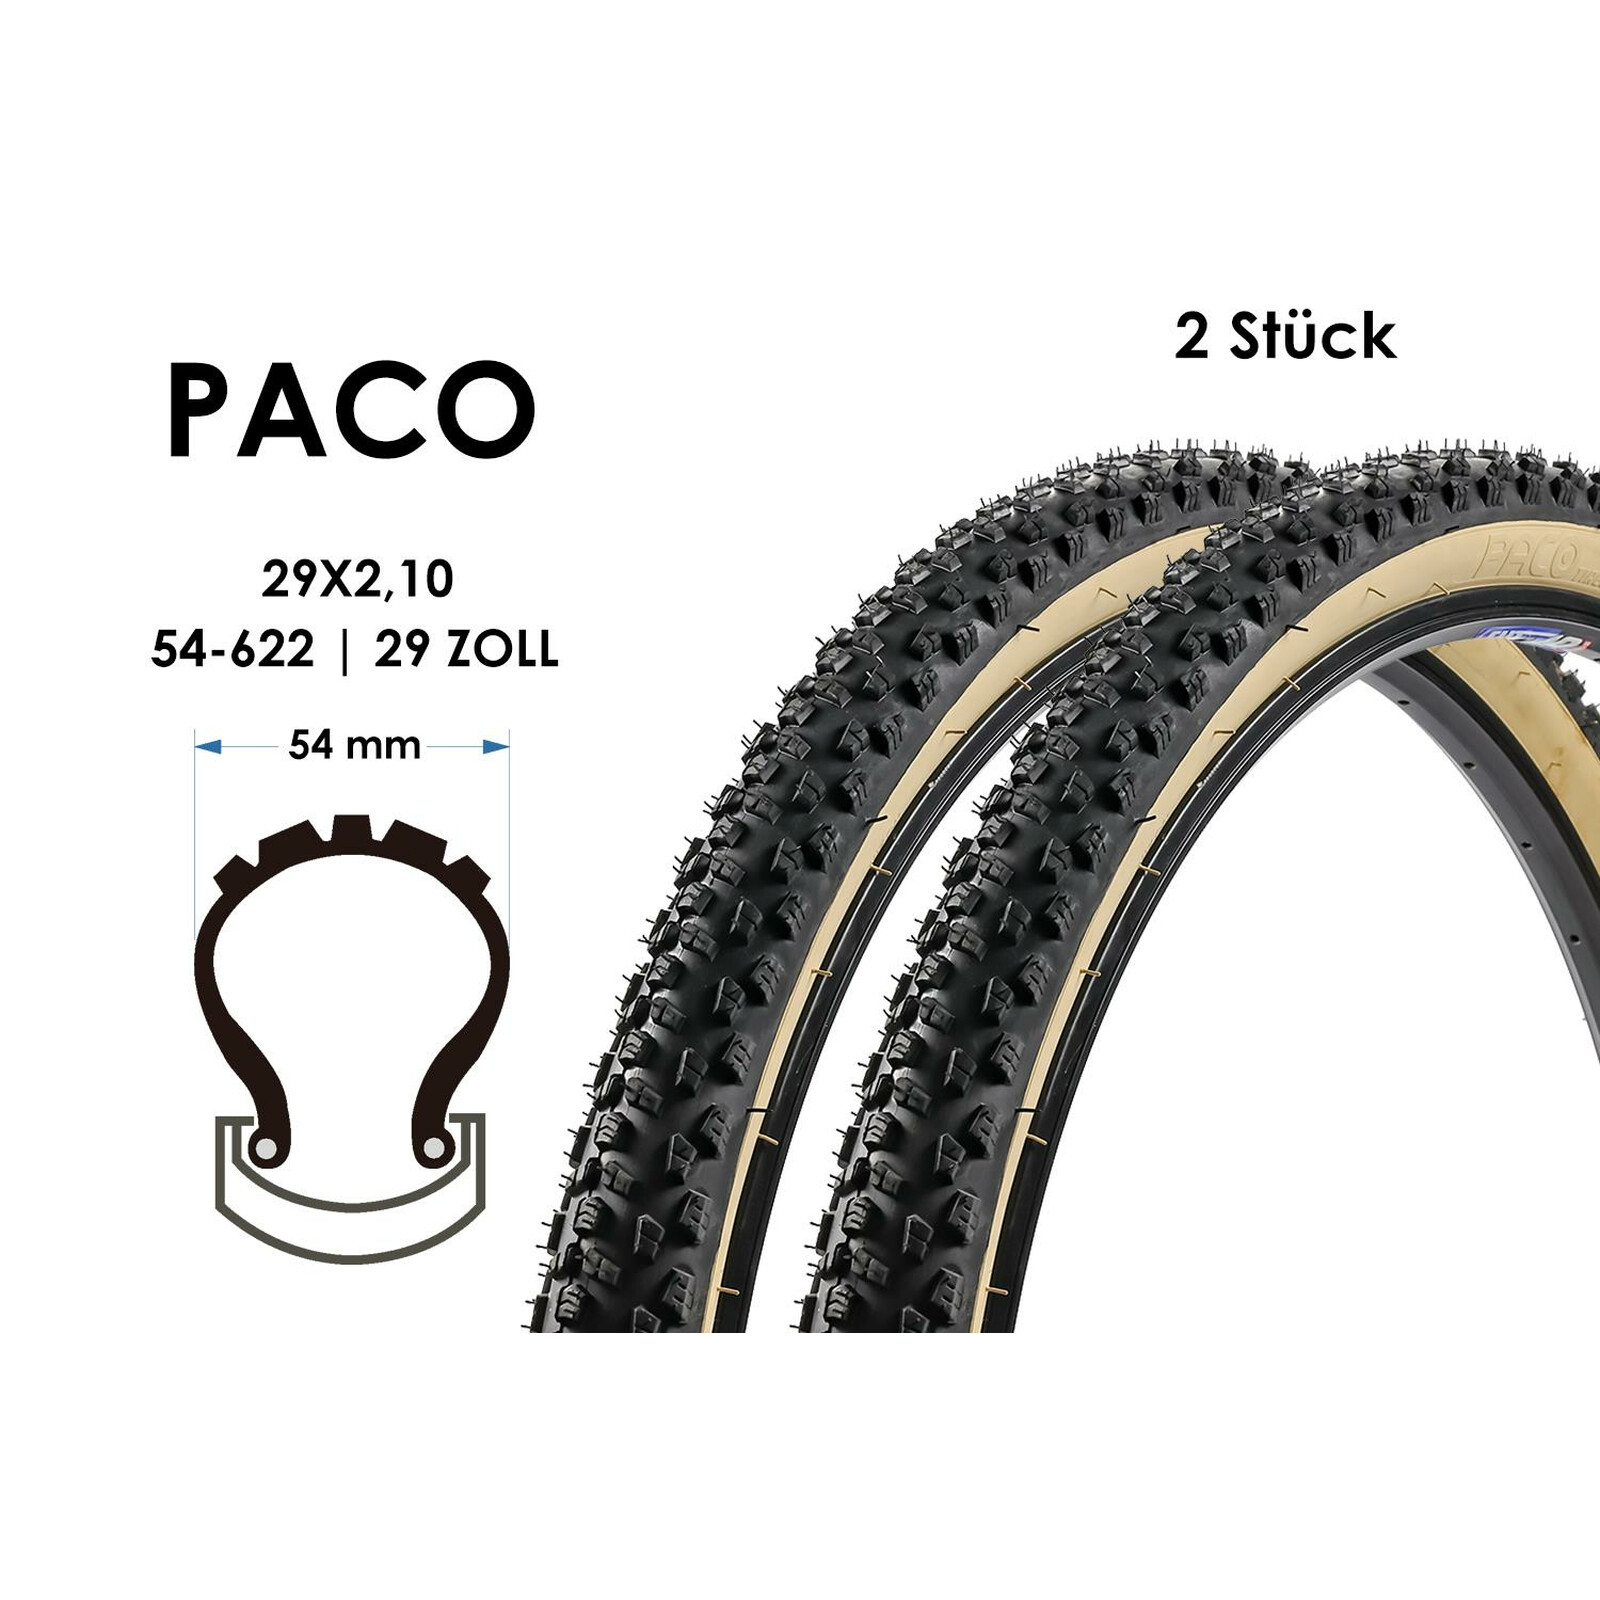 24,99 Stück 2 Fahrrad Decke PACO 54, € 29 Reifen 29x2.10 Tires MTB Zoll Mantel